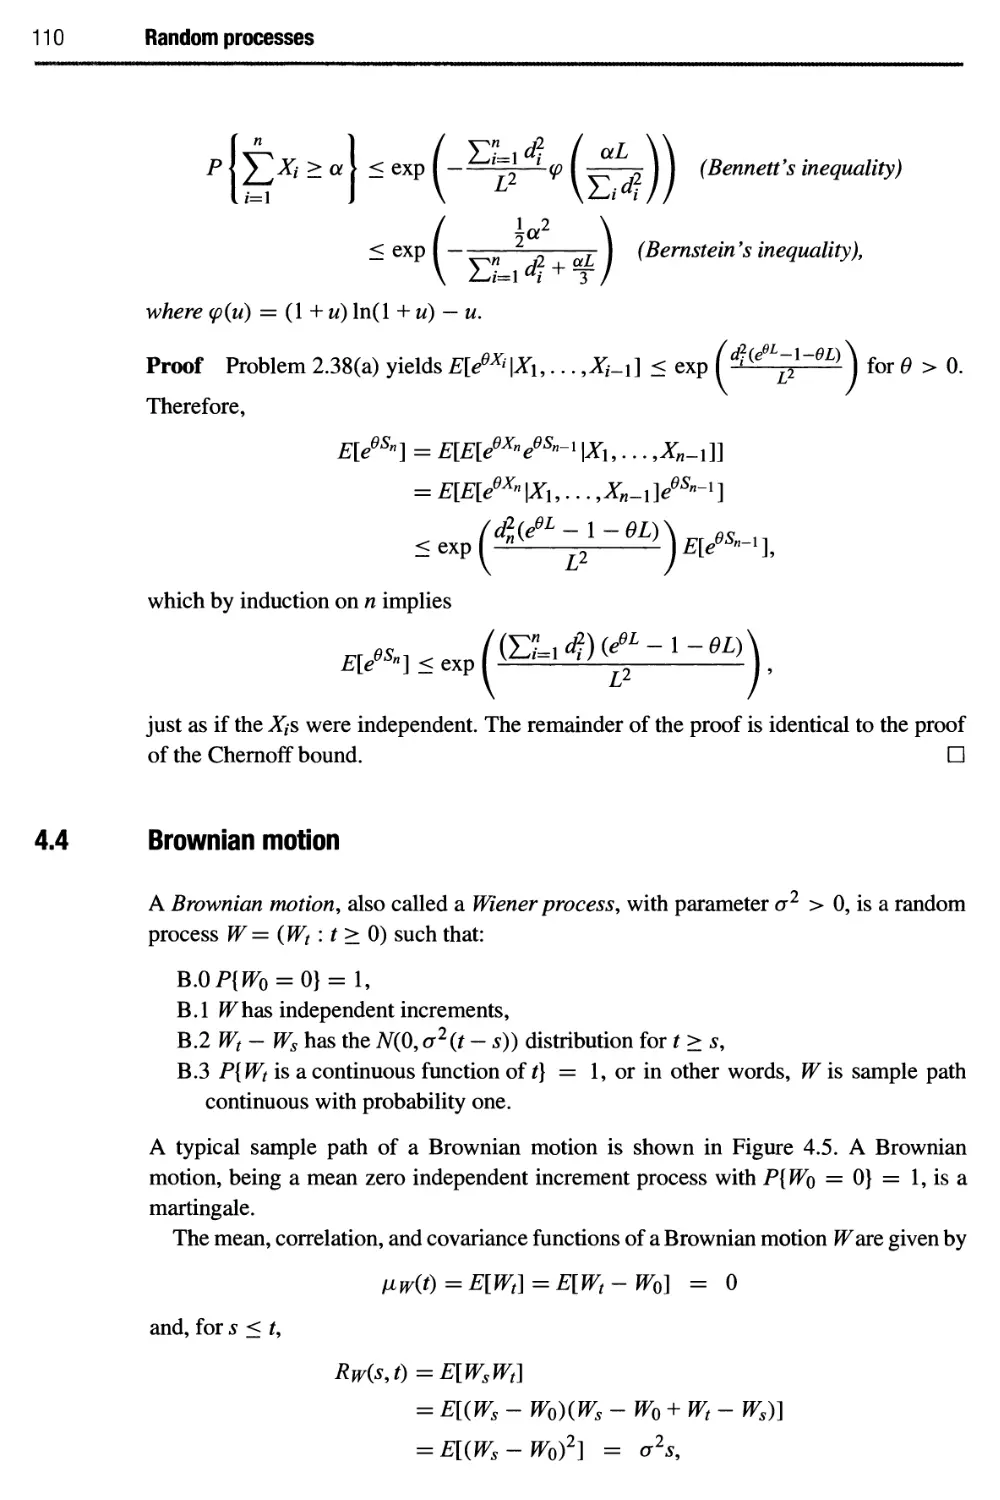 4.4 Brownian motion 110